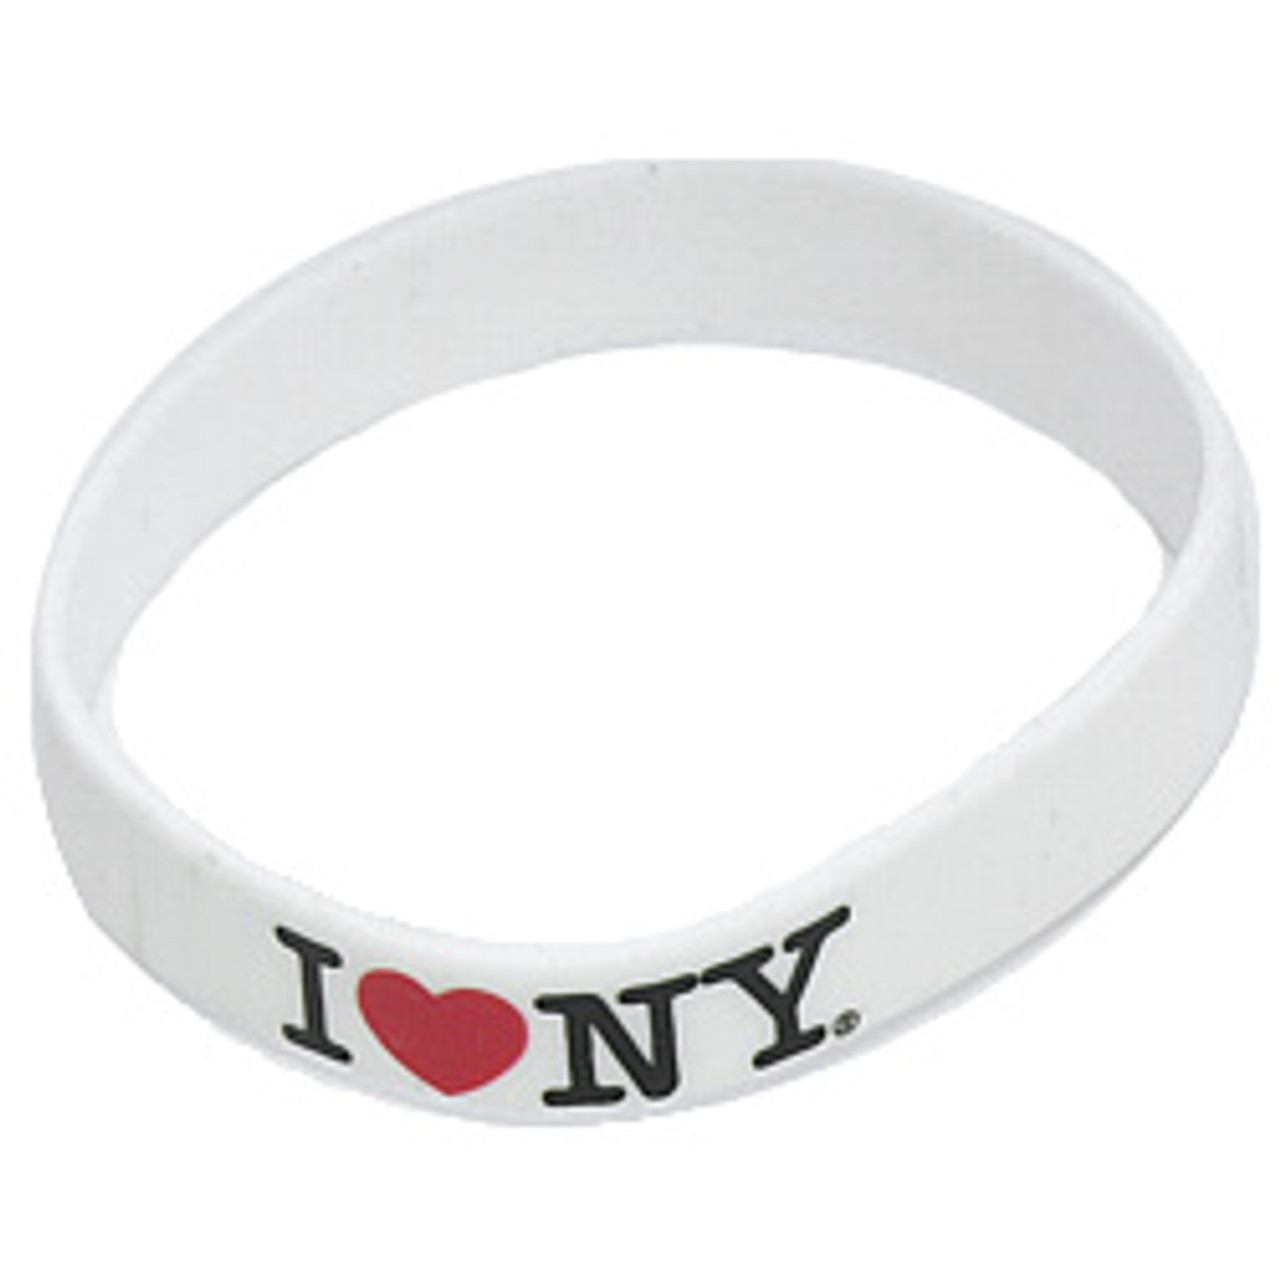 I Love NY Rubber Bracelet - White